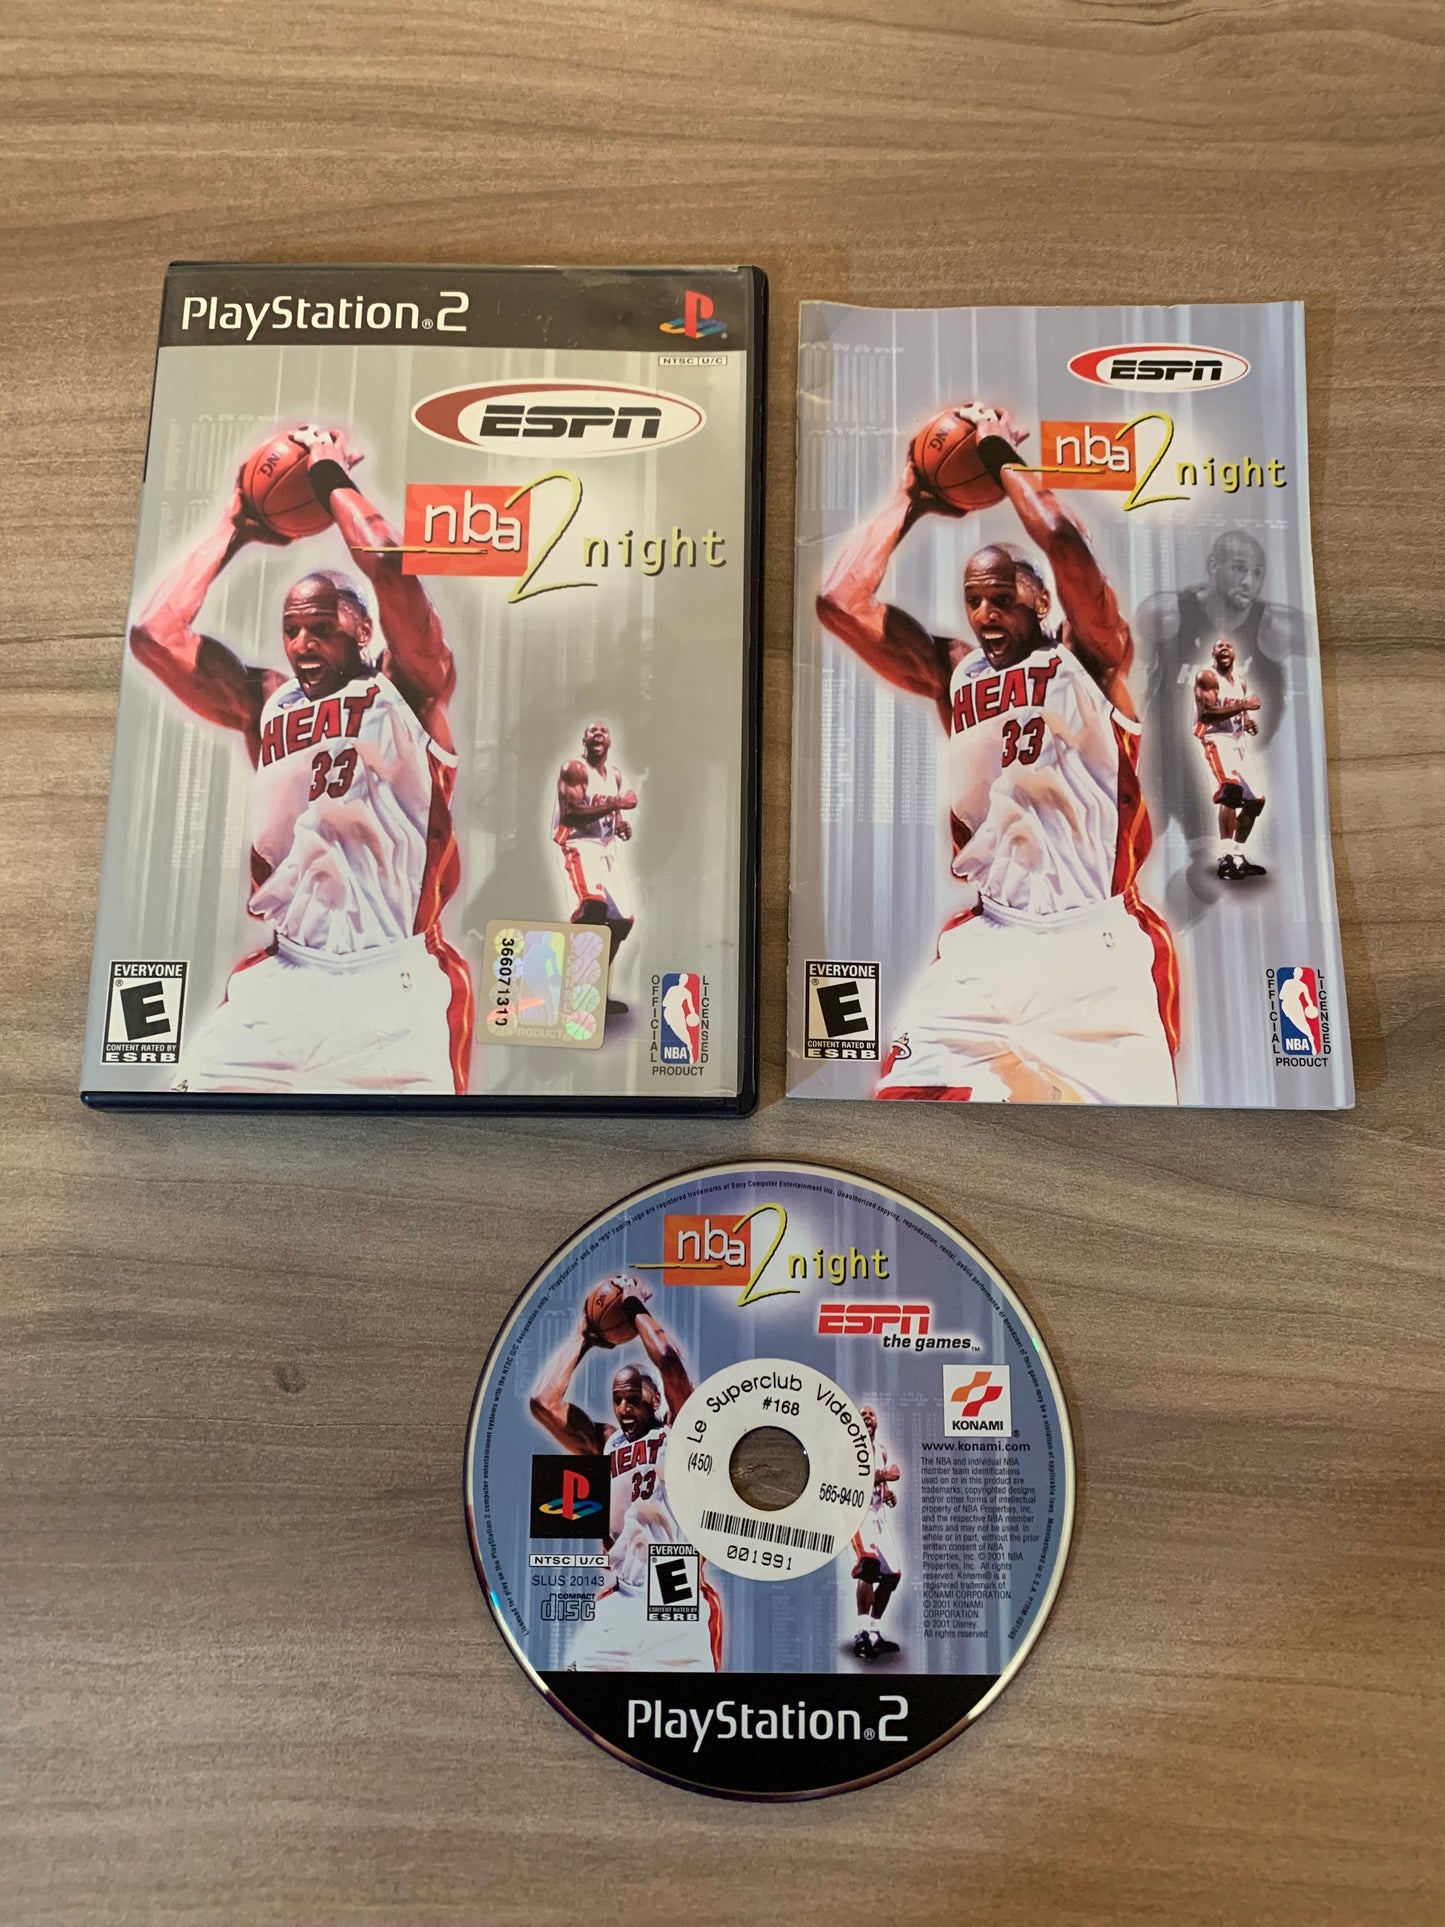 PiXEL-RETRO.COM : SONY PLAYSTATION 2 (PS2) COMPLET CIB BOX MANUAL GAME NTSC ESPN NBA 2 NIGHT 2NIGHT